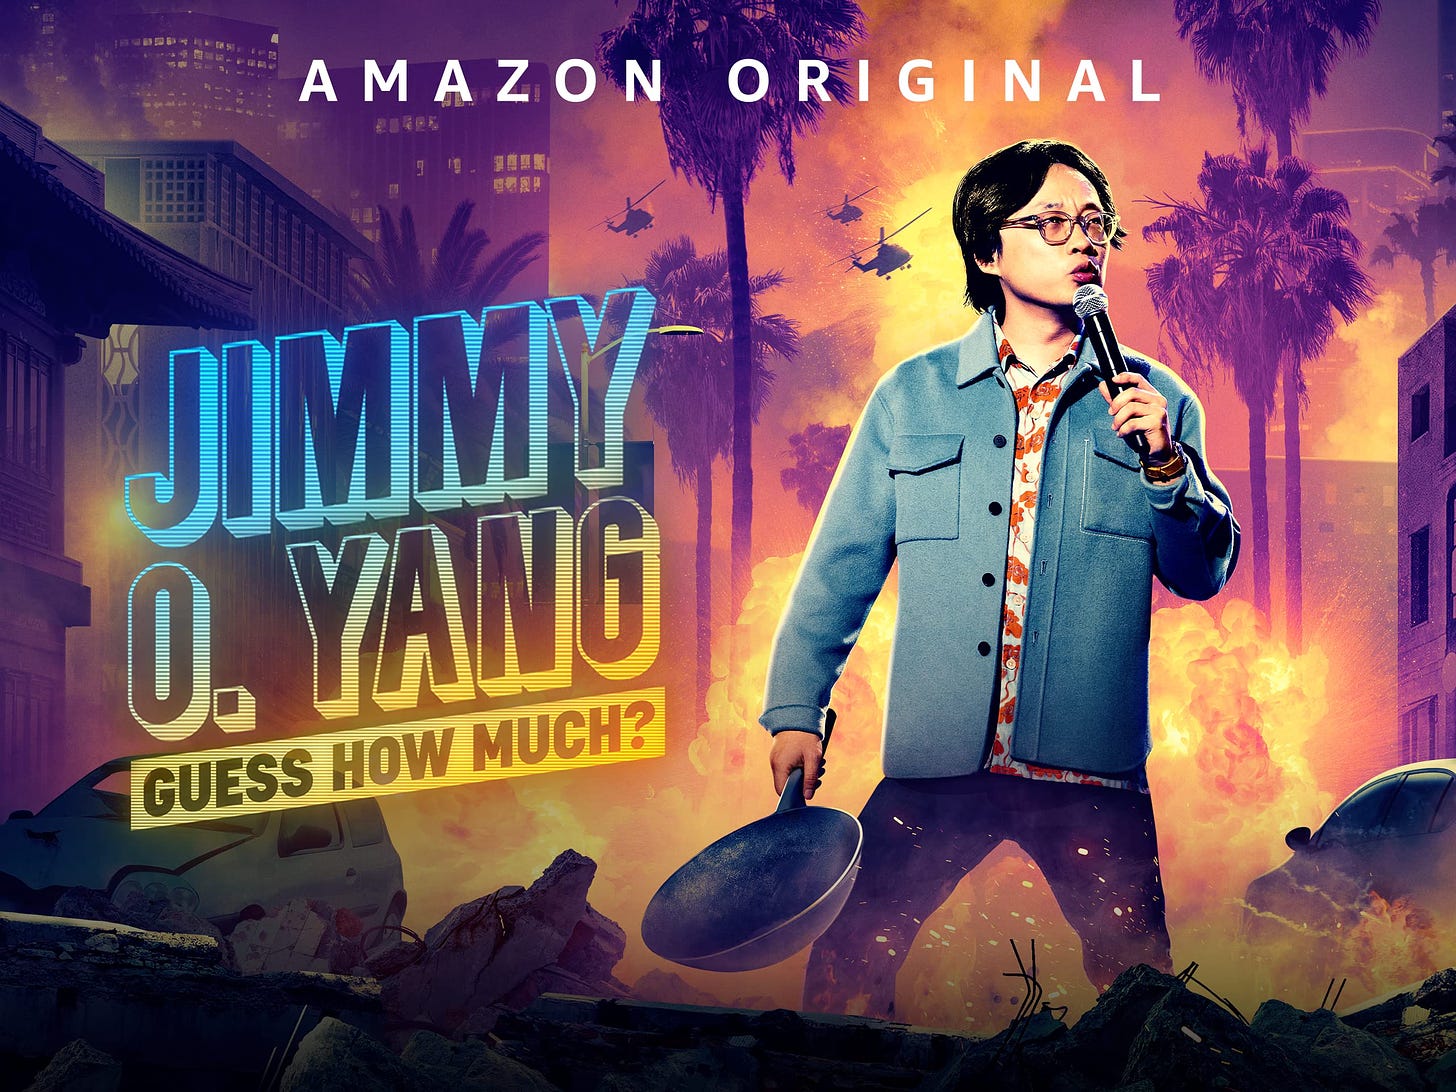 Amazon.com: Jimmy O. Yang: Guess How Much? : Jimmy O. Yang, Jimmy O. Yang, Jimmy  O. Yang, Brian Volk-Weiss, Marcus Raboy, Jimmy O. Yang, Cisco Henson: Prime  Video